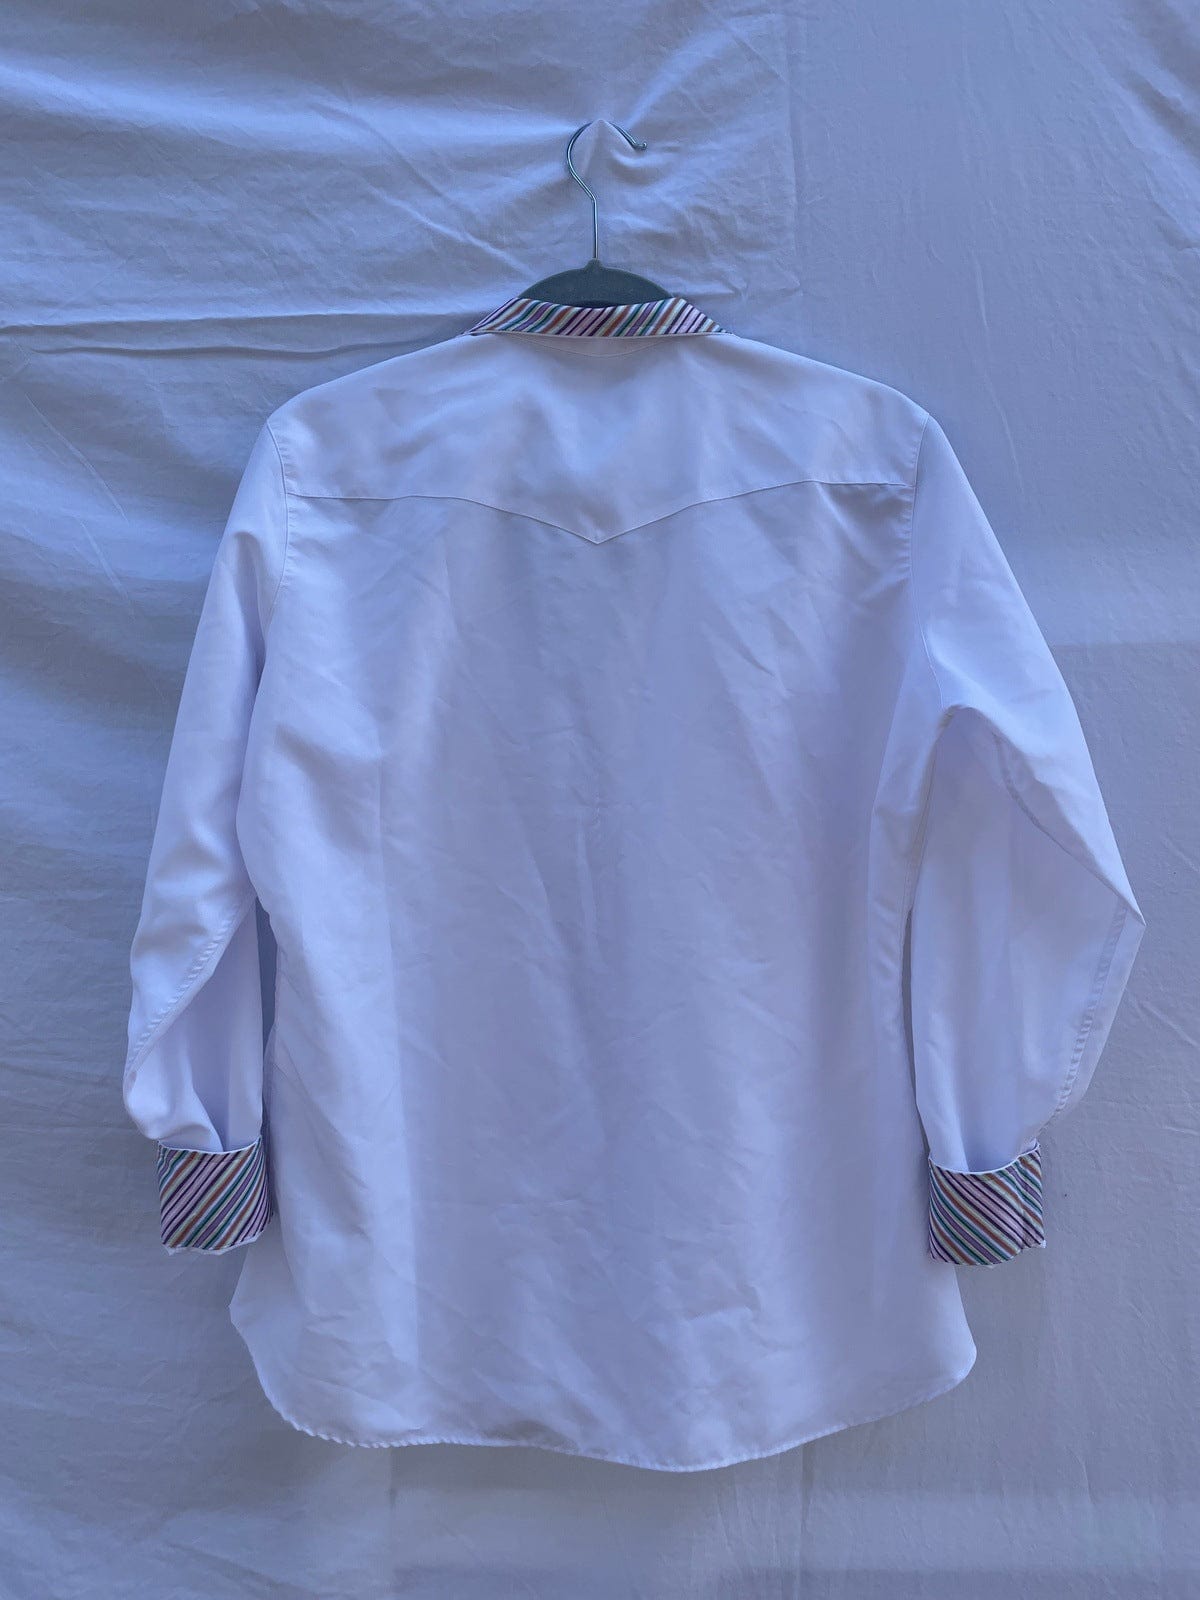 ThriftedEquestrian Clothing 40 Essex Show Shirt - Size 40